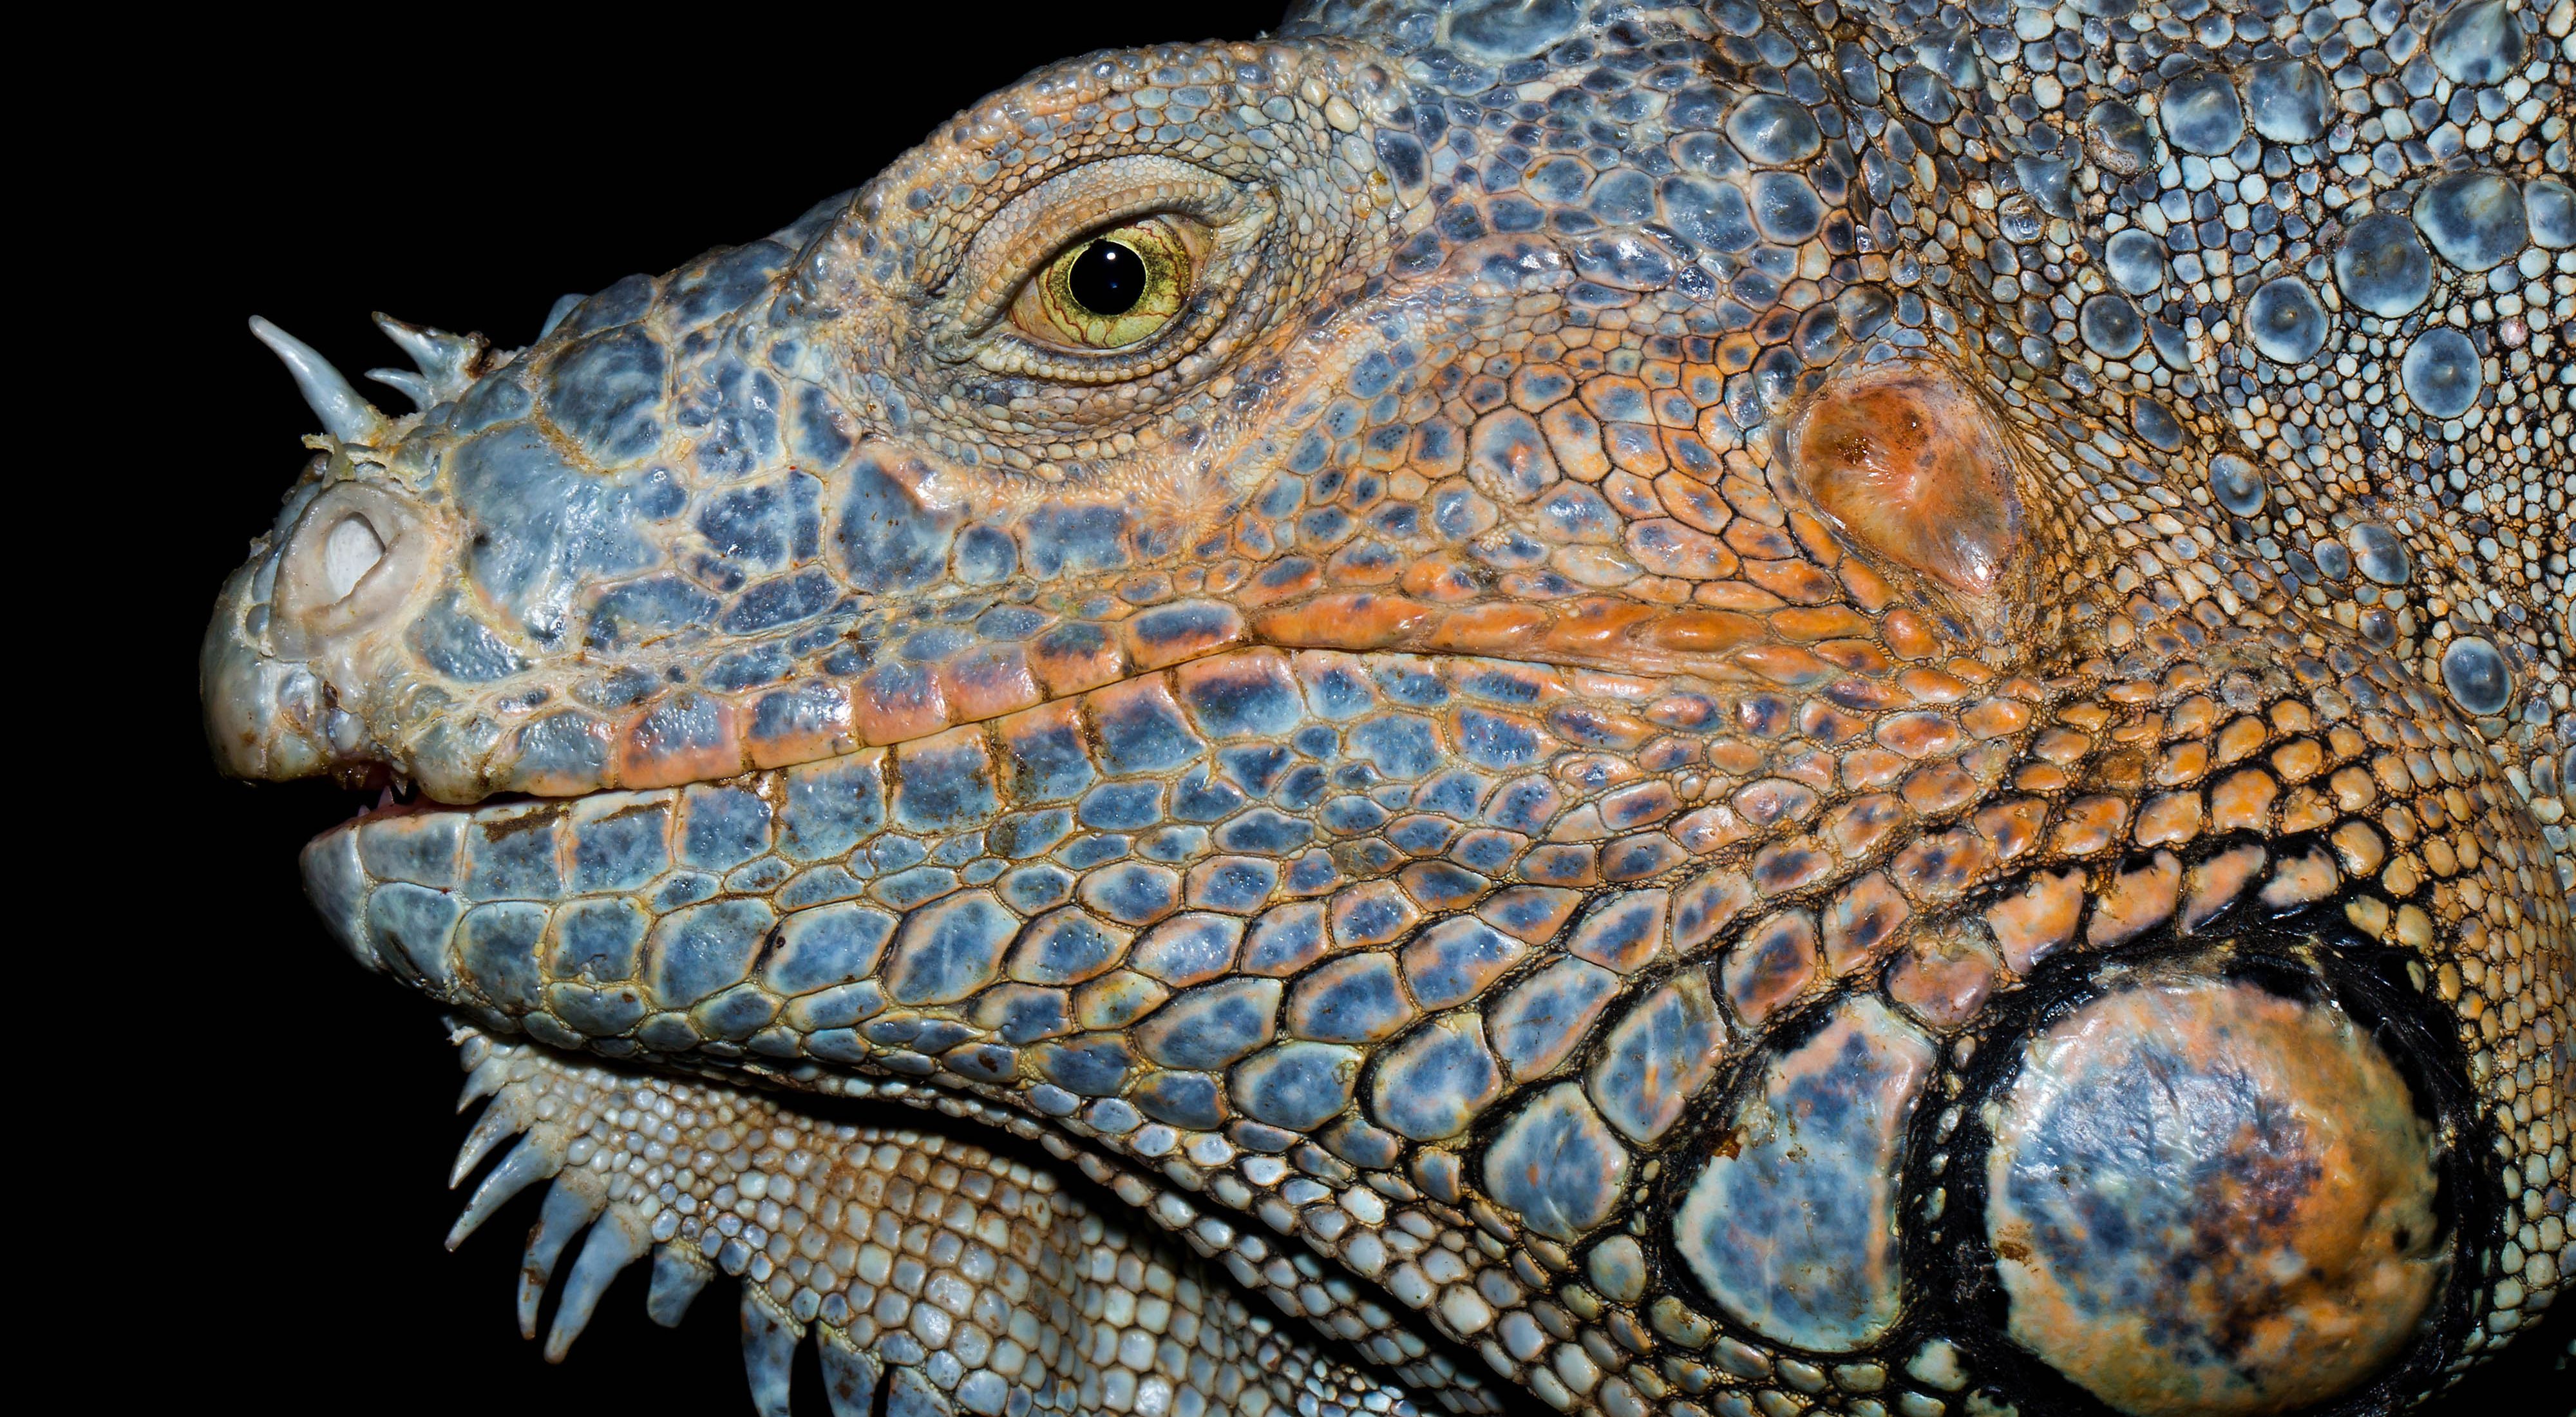 Una imagen íntima de una iguana